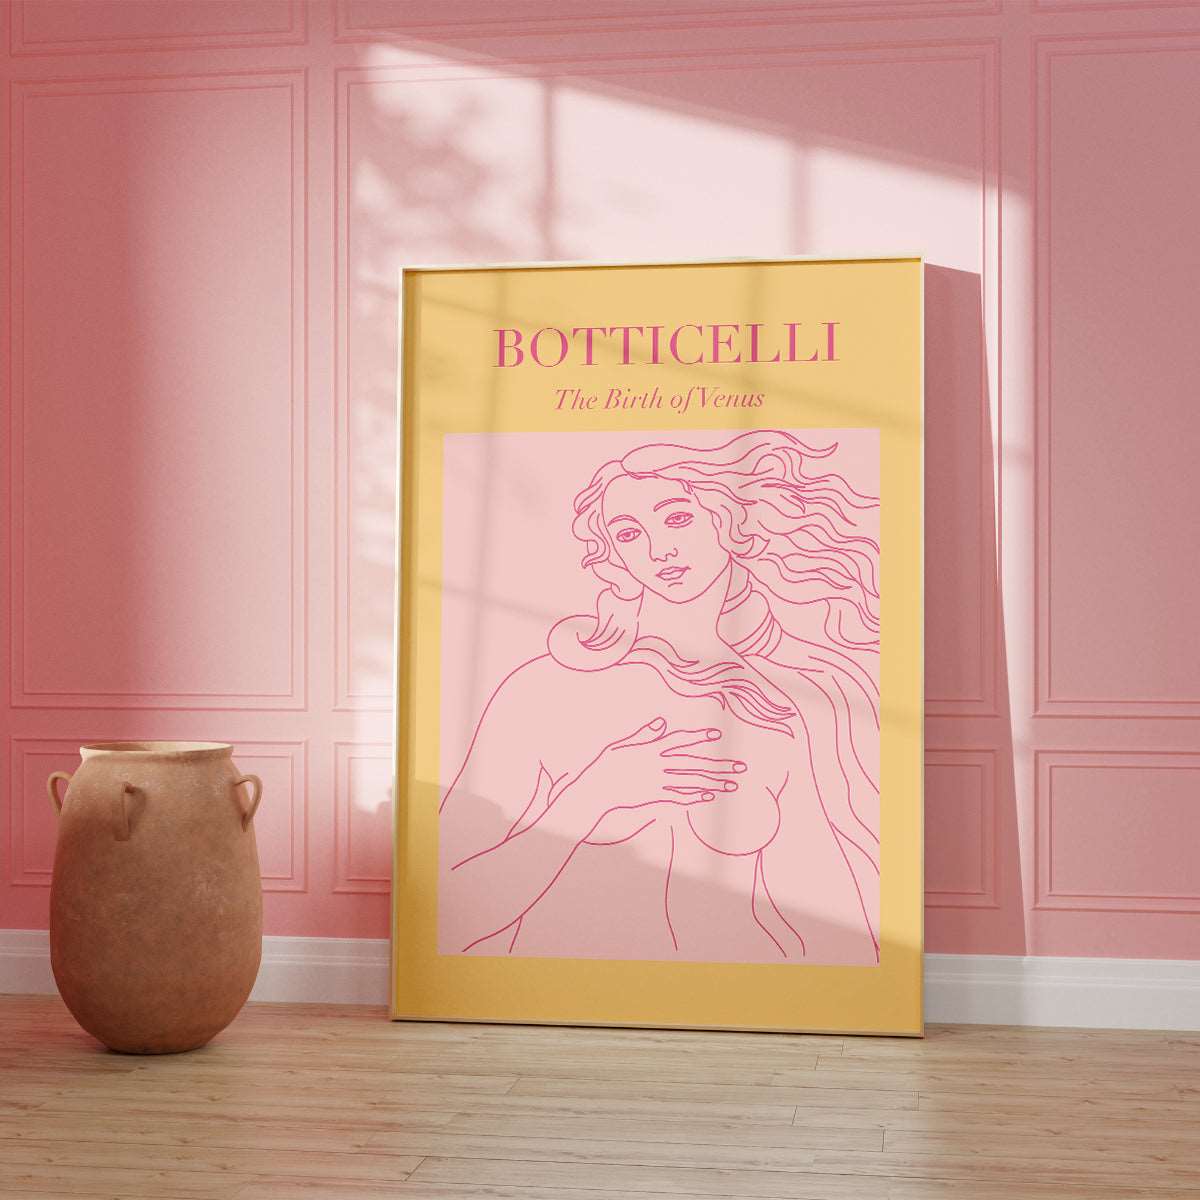 Botticelli Venus Art Poster Print